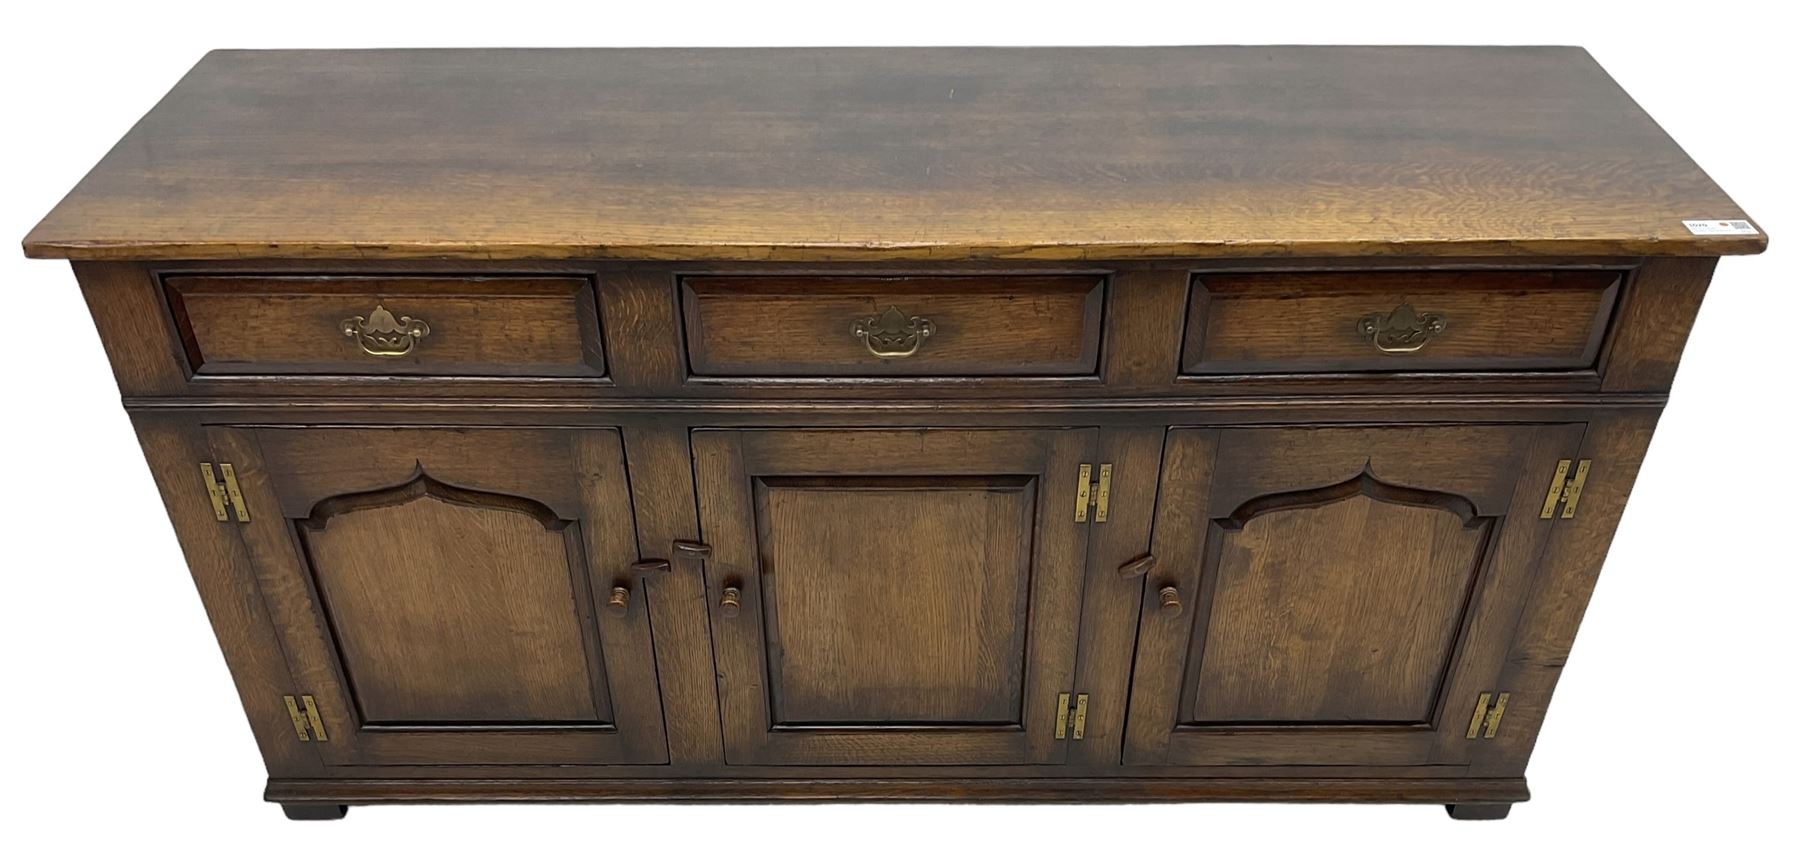 Titchmarsh & Goodwin - traditional oak dresser base - Image 2 of 9